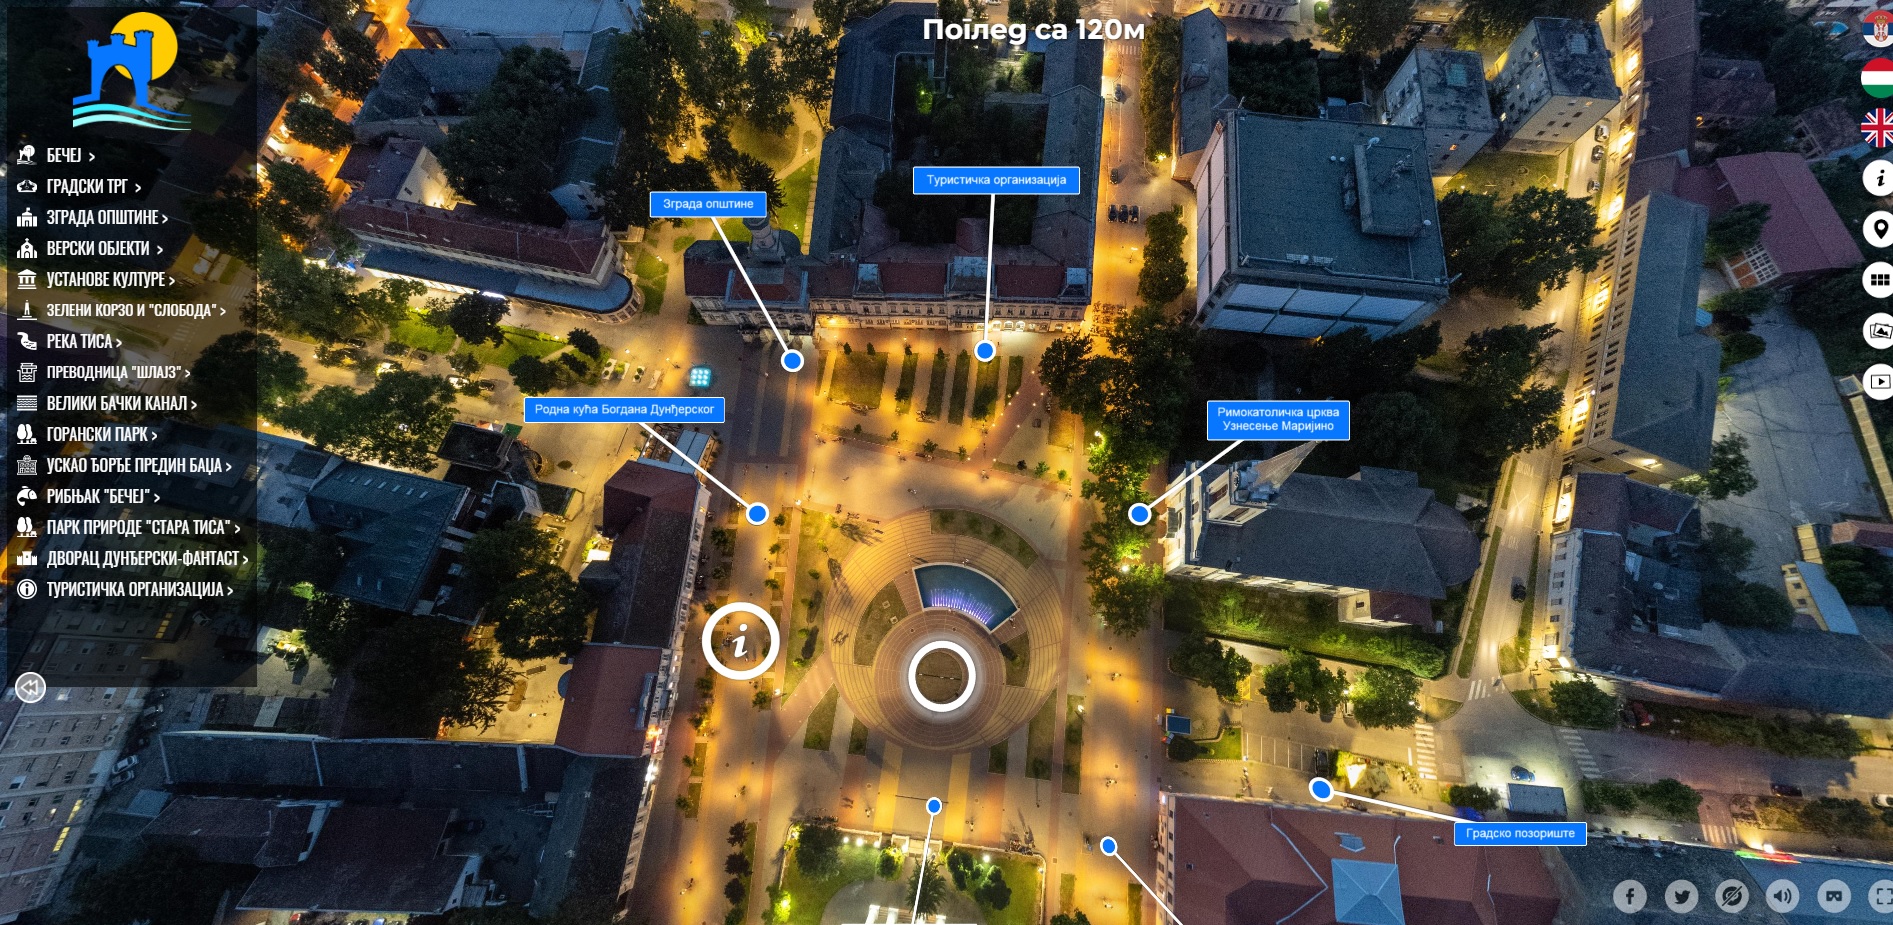 Bečej u 360°: Virtuelna Tura Otkriva Znamenitosti opštine